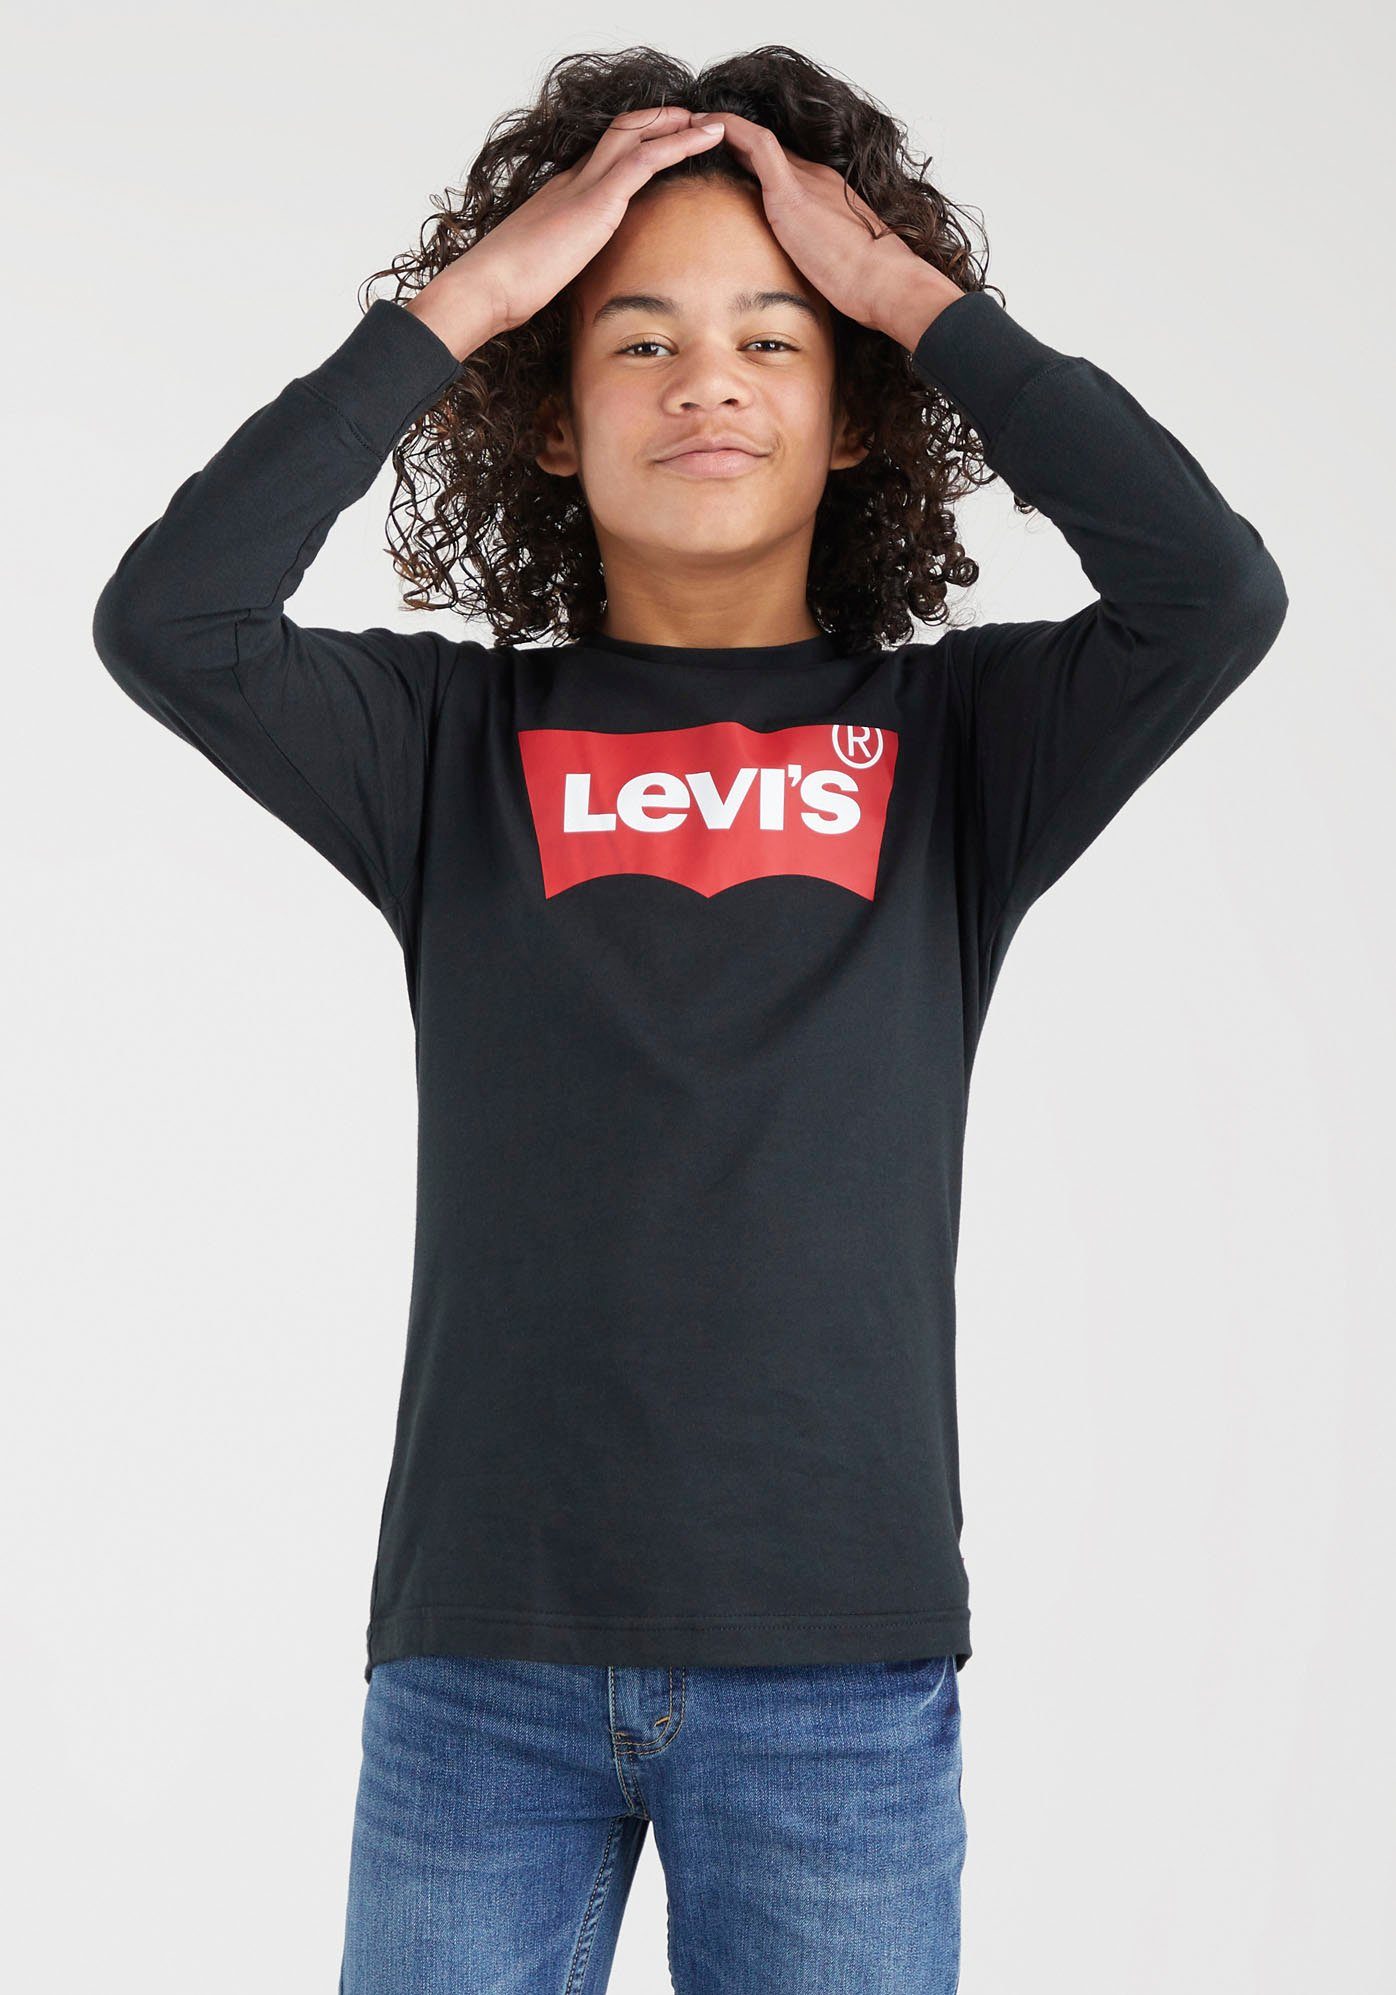 Neueste Produkte aus dem Ausland Levi's® Kids Langarmshirt L/S BATWING BOYS schwarz for TEE